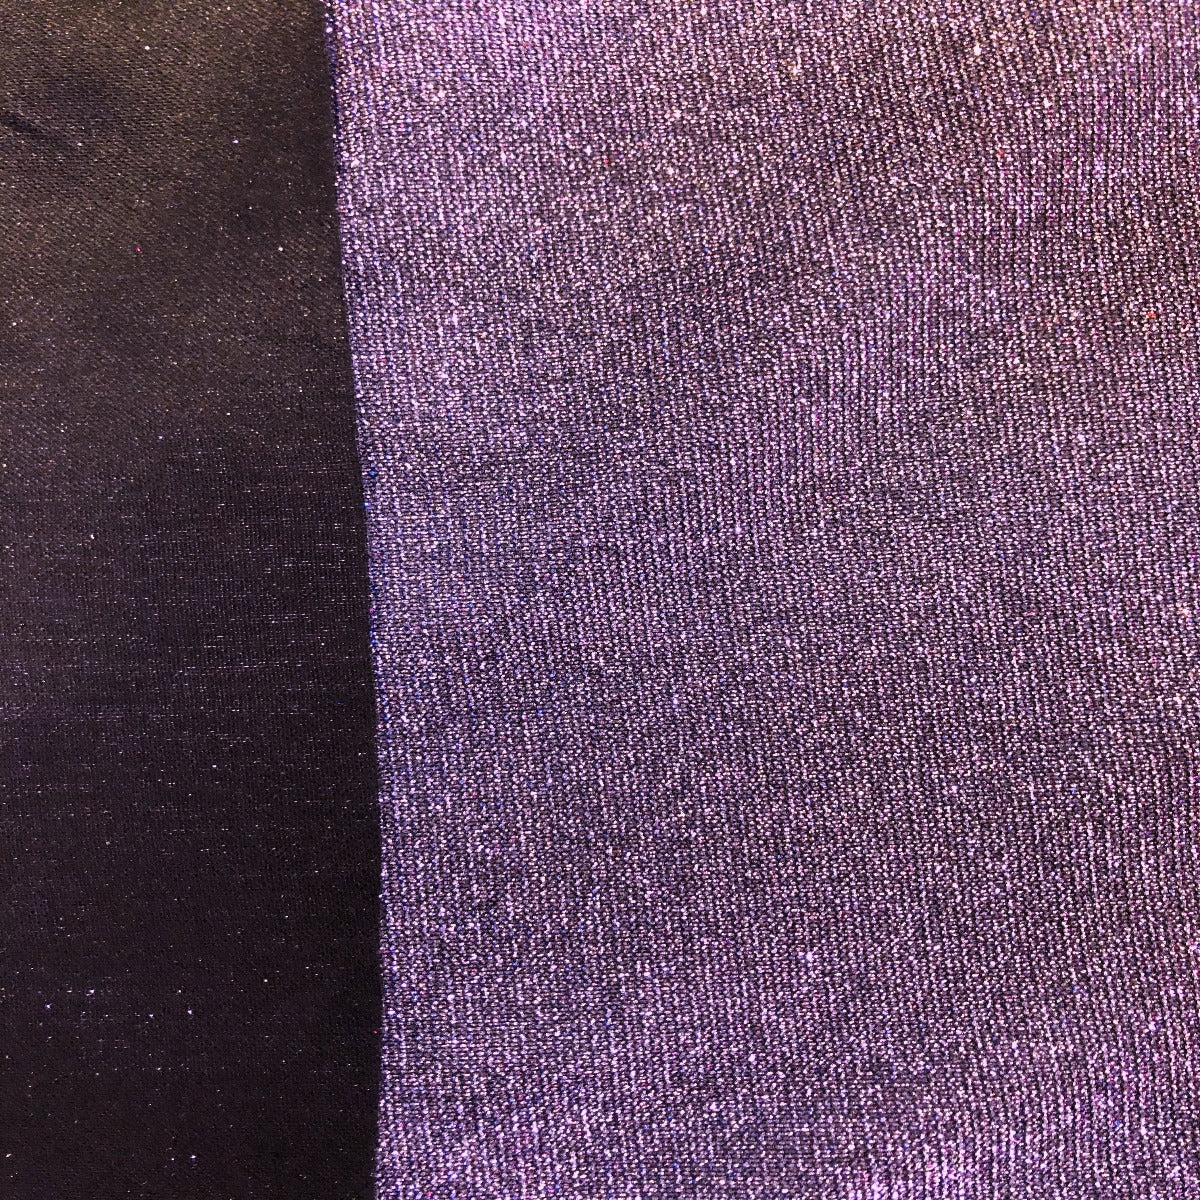 Blue Pink Lavender Holographic Shimmer Glitter Spandex Fabric - Fashion Fabrics Los Angeles 